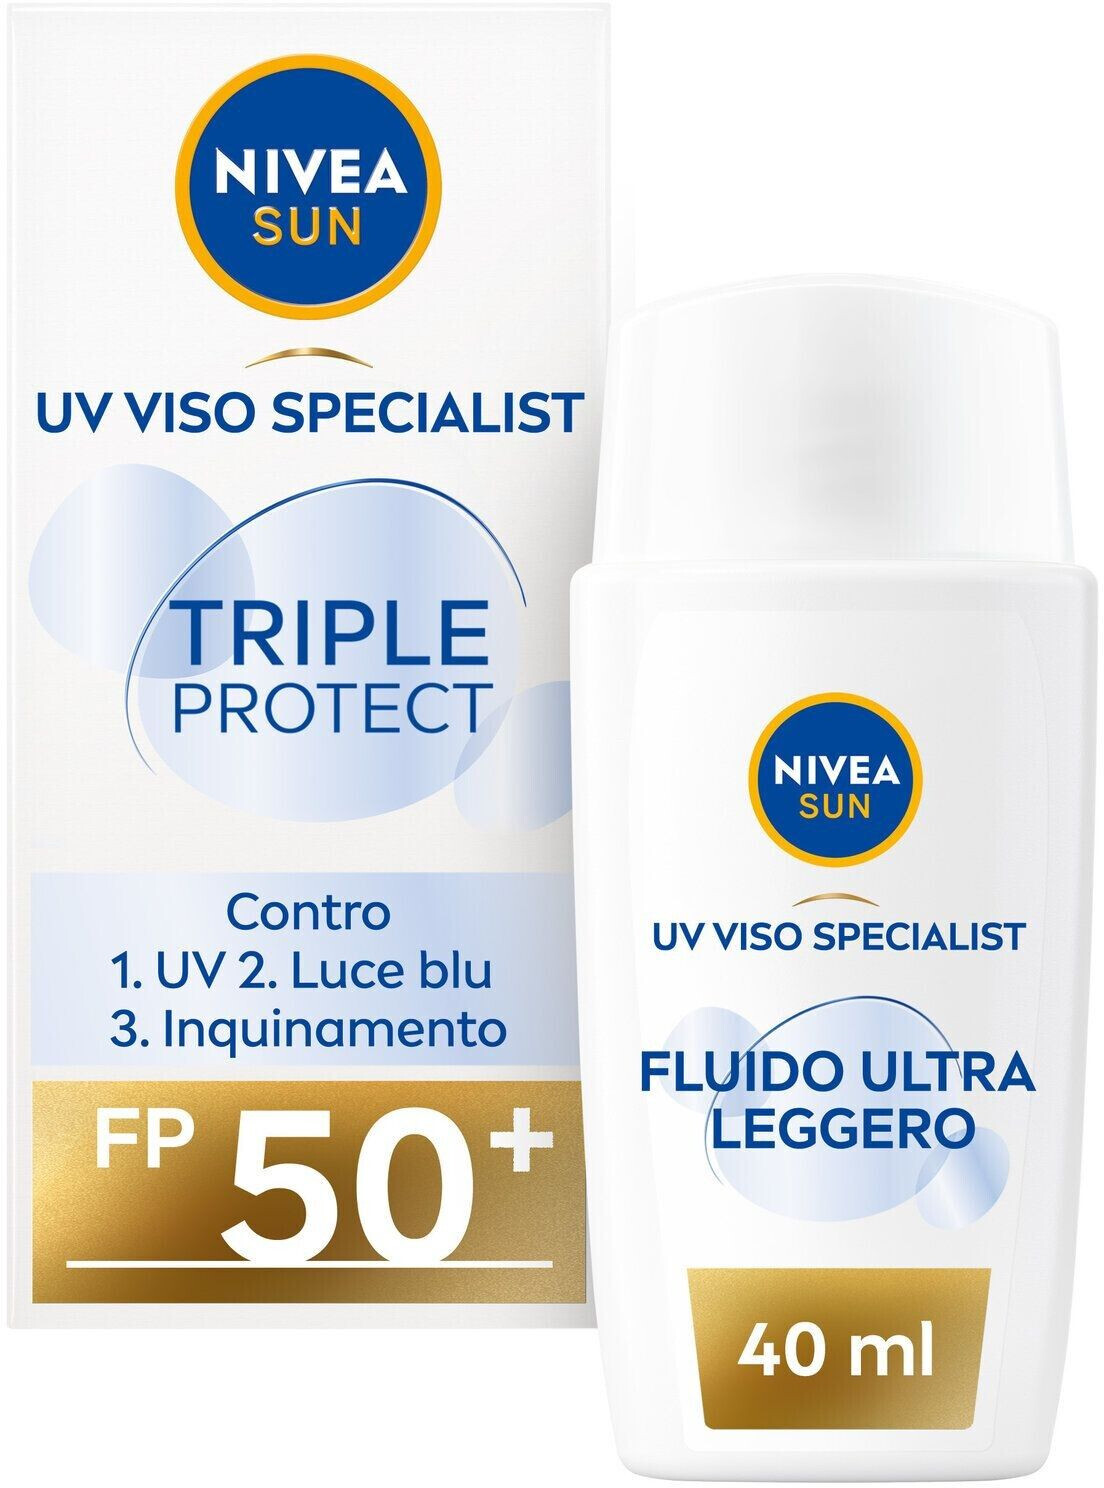 Photos - Sun Skin Care Nivea SUN sun fluid face triple protect SPF 50+  (40 ml)